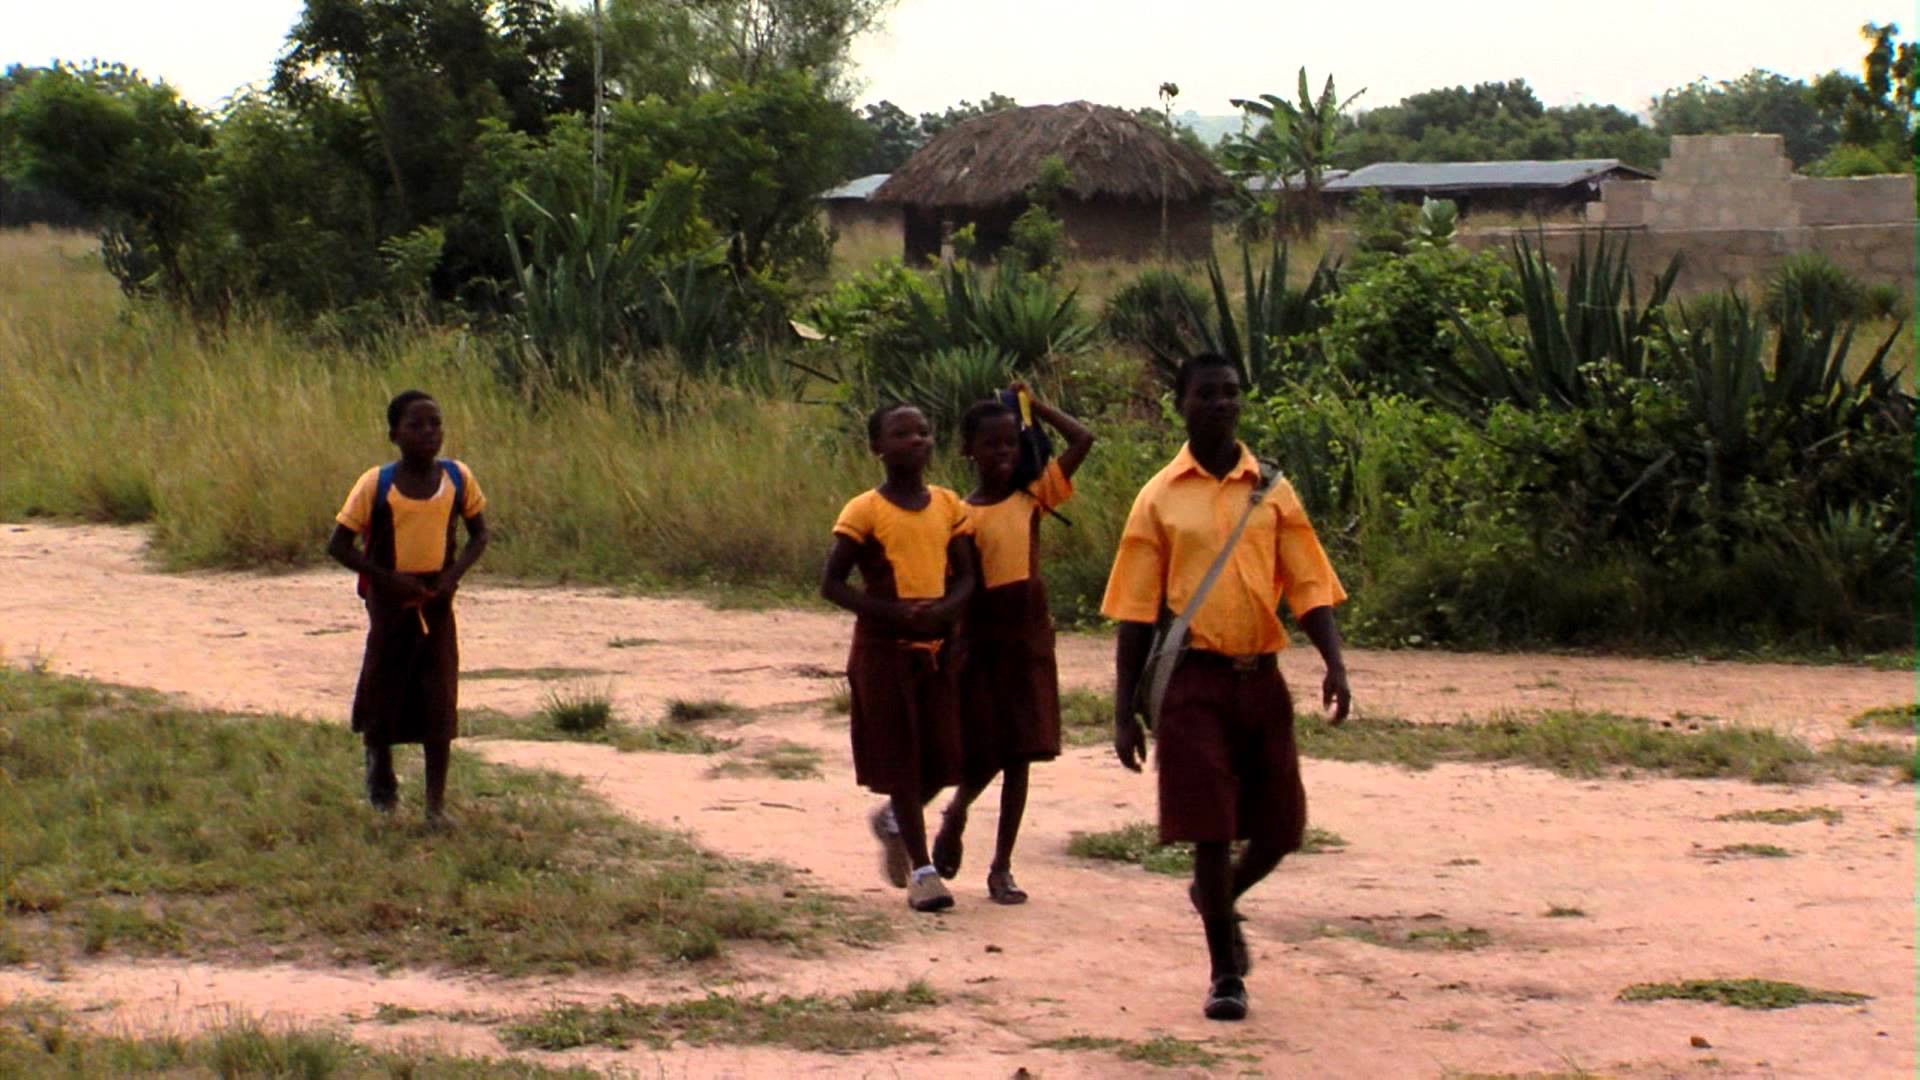  Ghana’s school kids lack creativity,says Christen Wassmer Swiss educationist